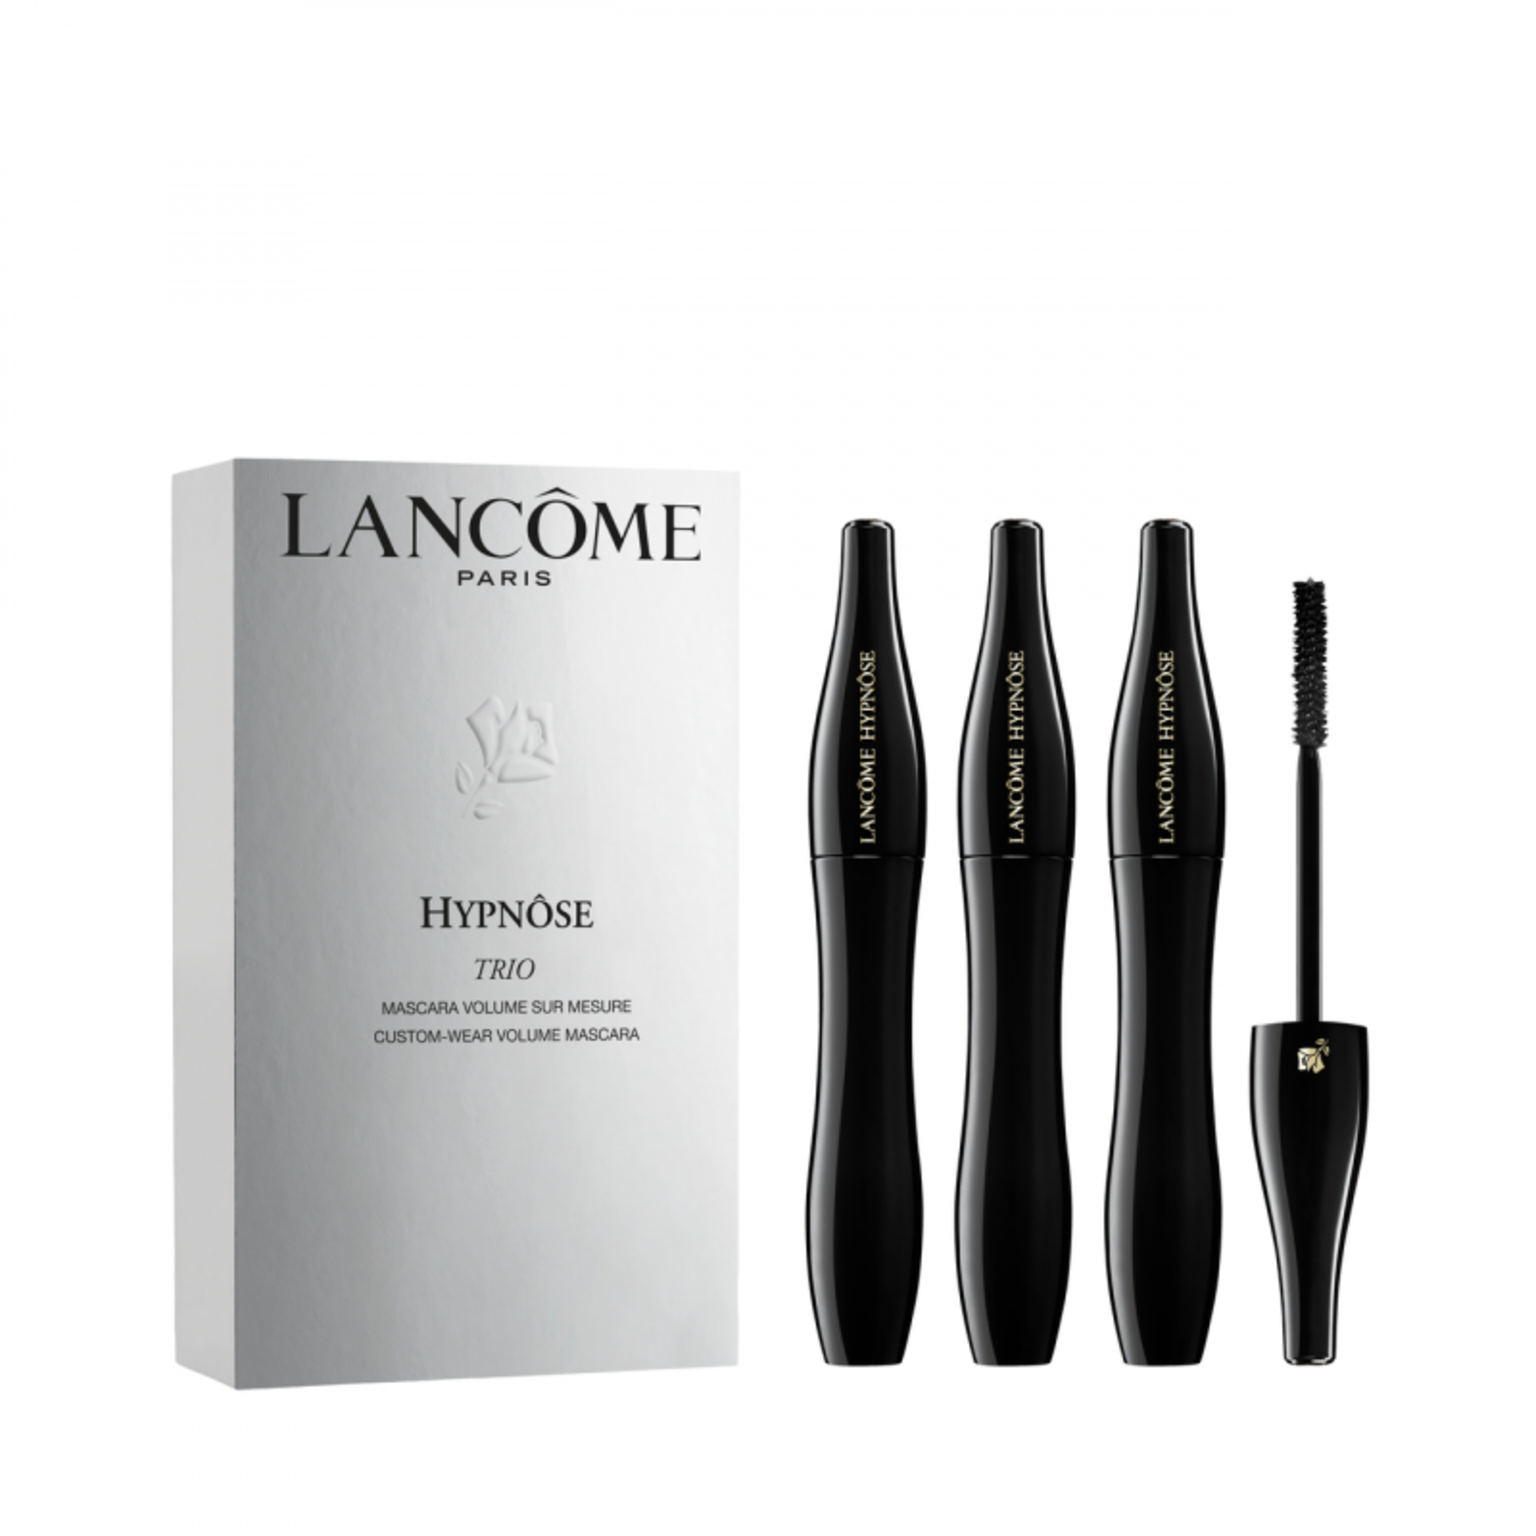 Lancôme Trio Hypnose set